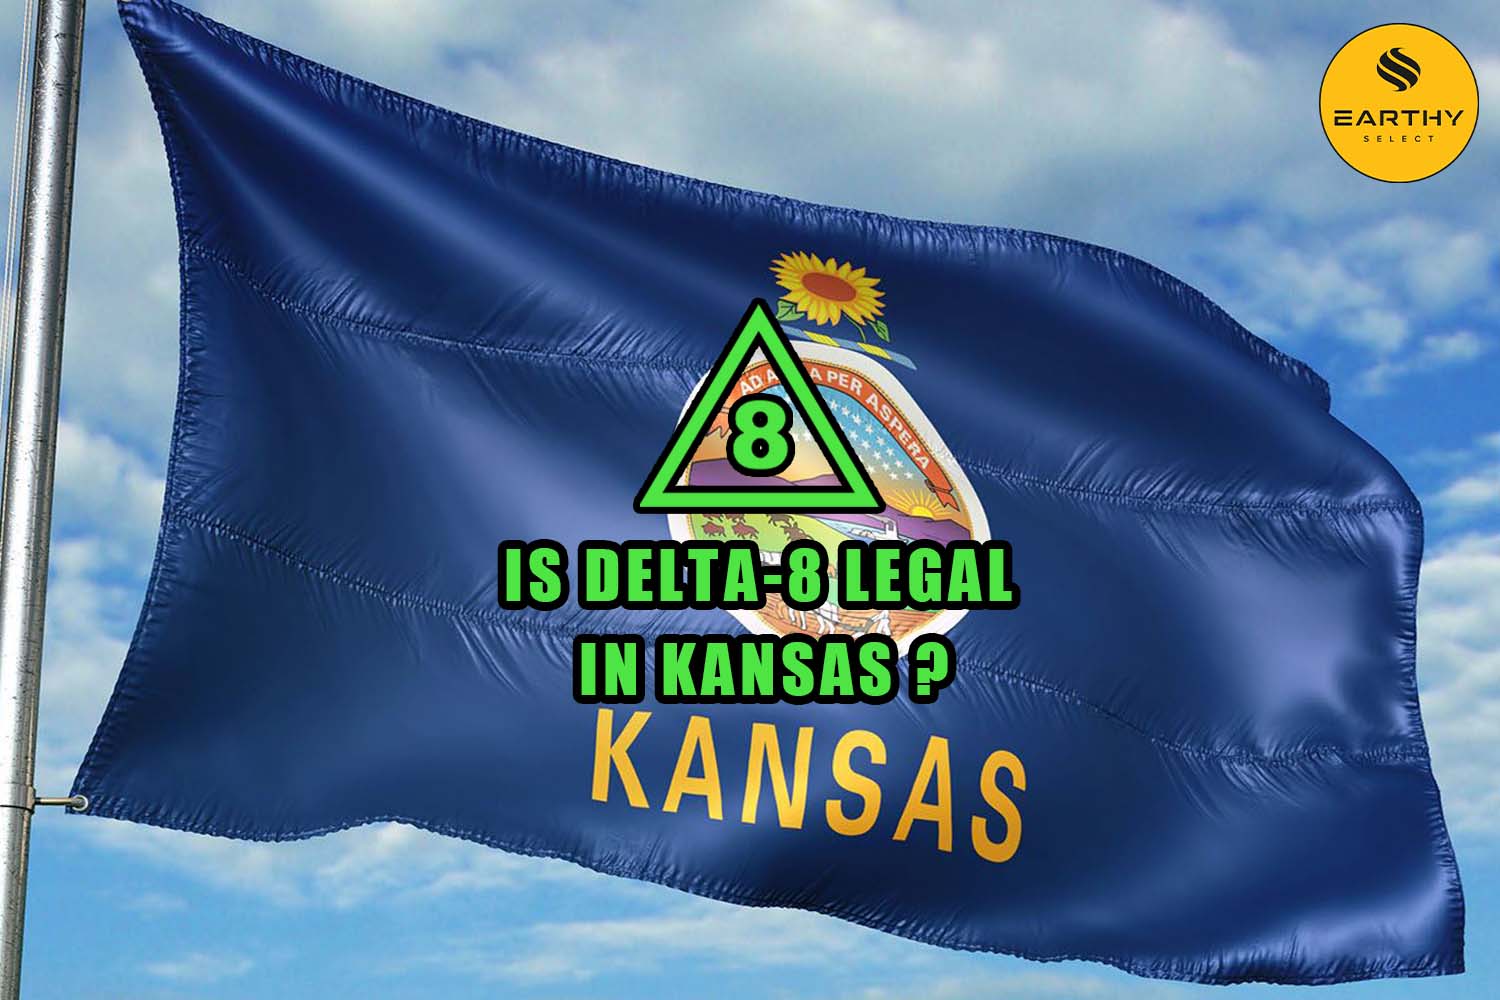 Is Delta-8 Legal in Kansas flag